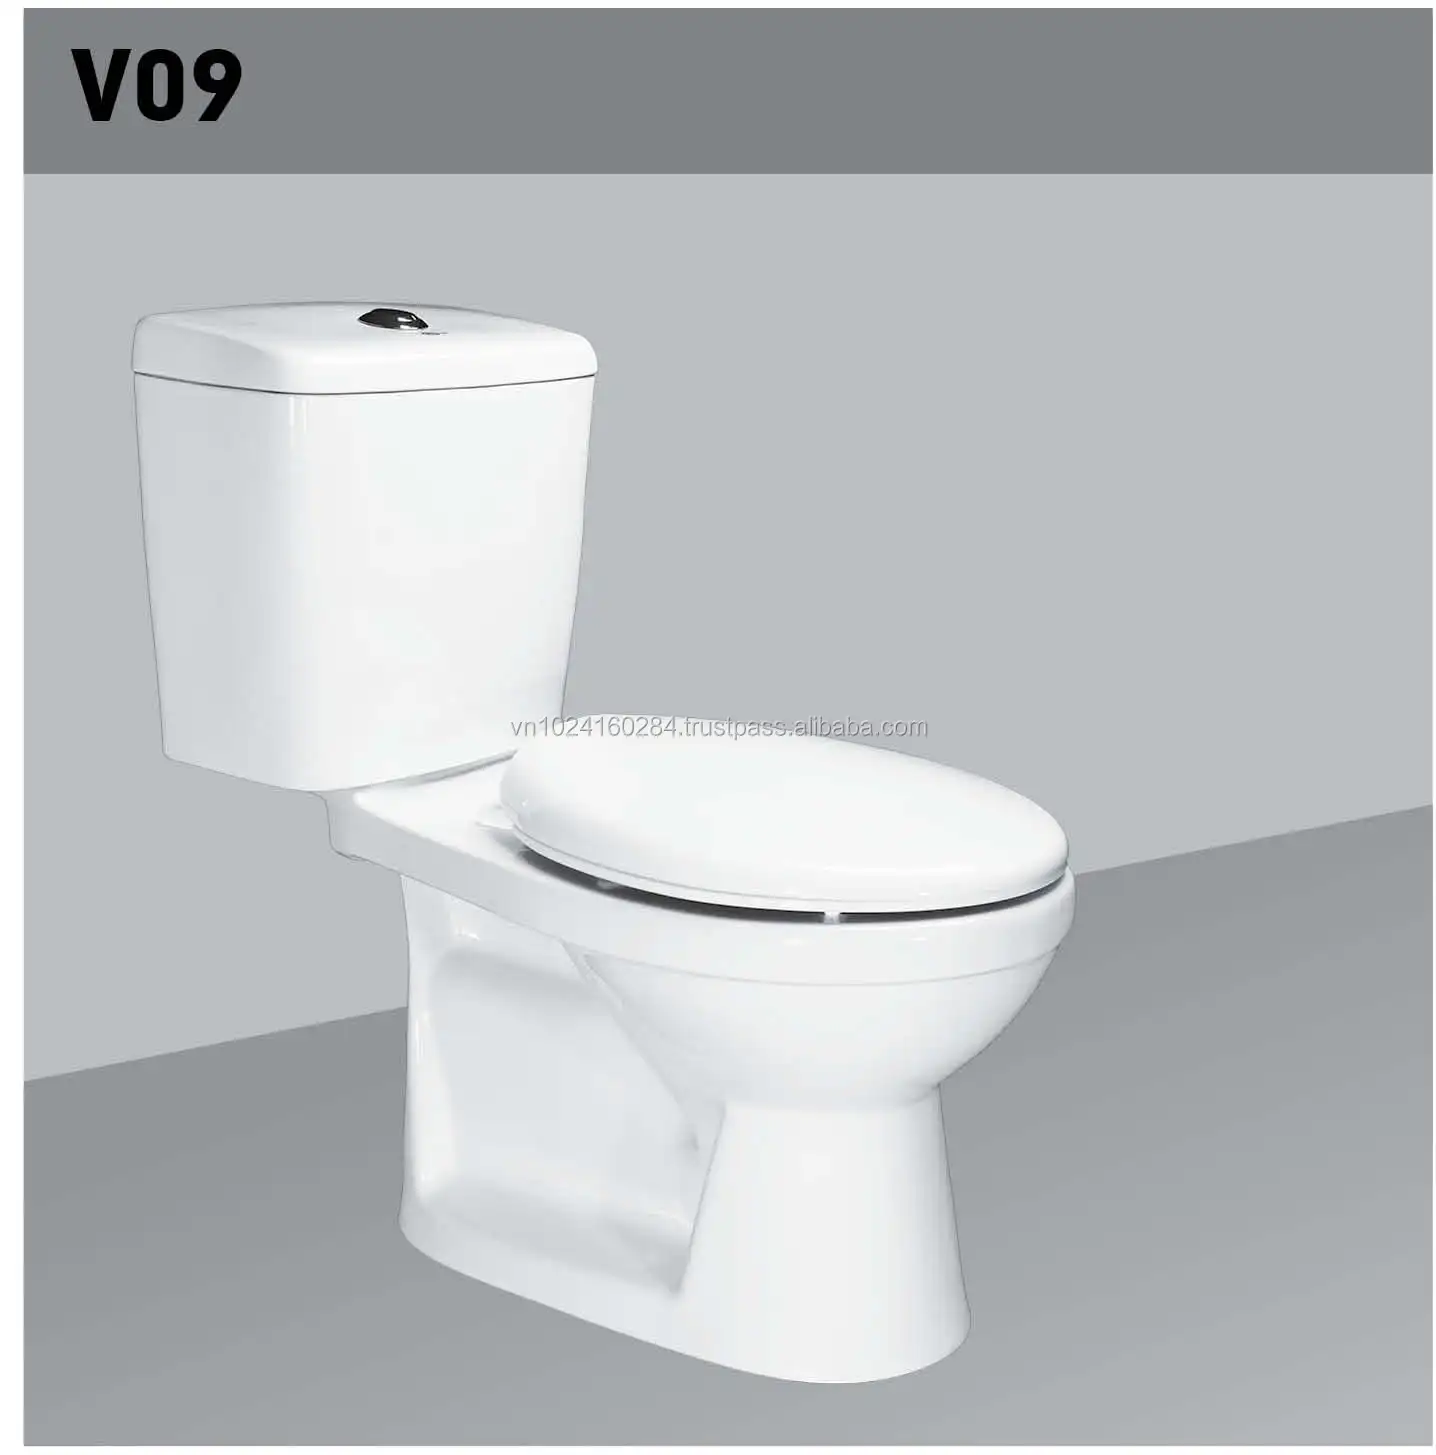 Promotional Sanitary ware -bathroom two piece toilet seat, Ceramic, White , Dual flush, Cyclon flushing